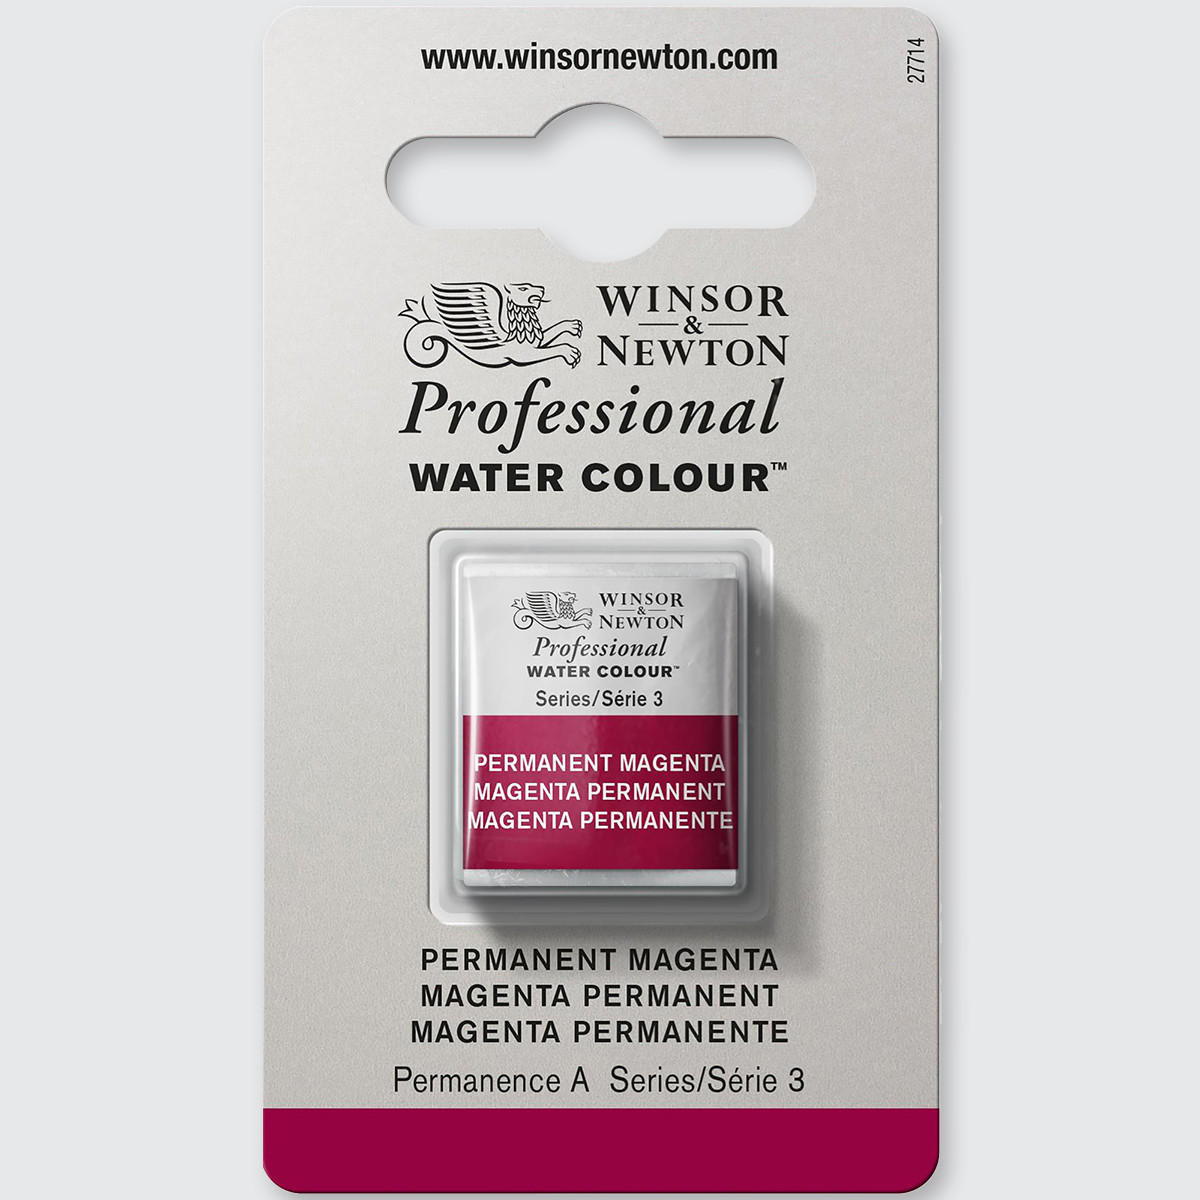 Winsor & Newton Professional Water Colour Half Pan Permanent Magenta